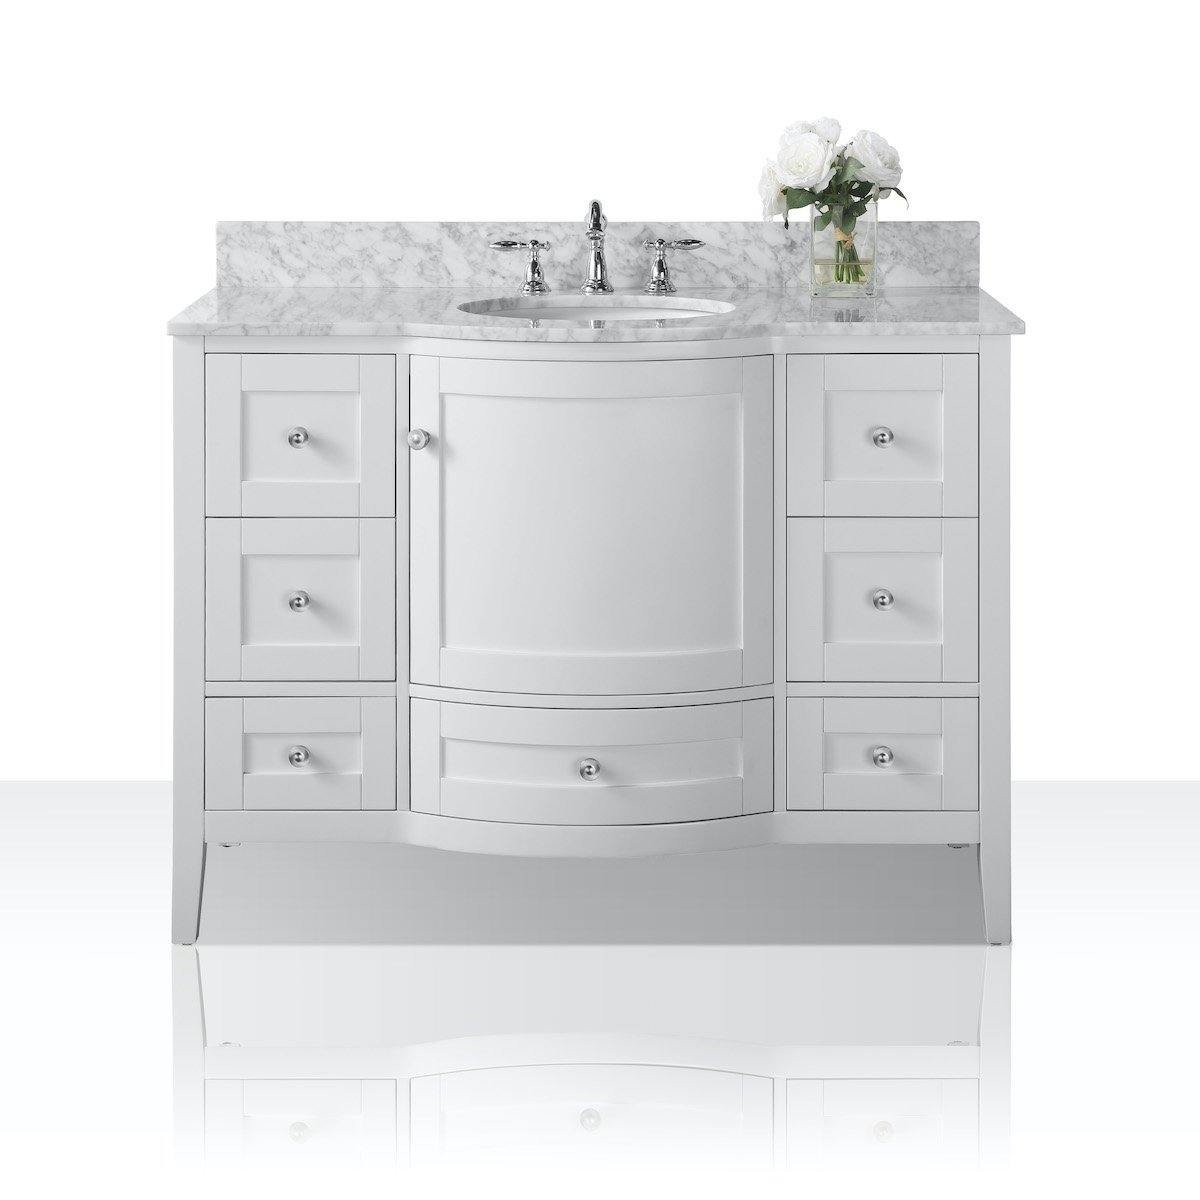 Ancerre Designs Lauren 48 Inch White Single Vanity with Nickel Hardware #hardware_brushed nickel